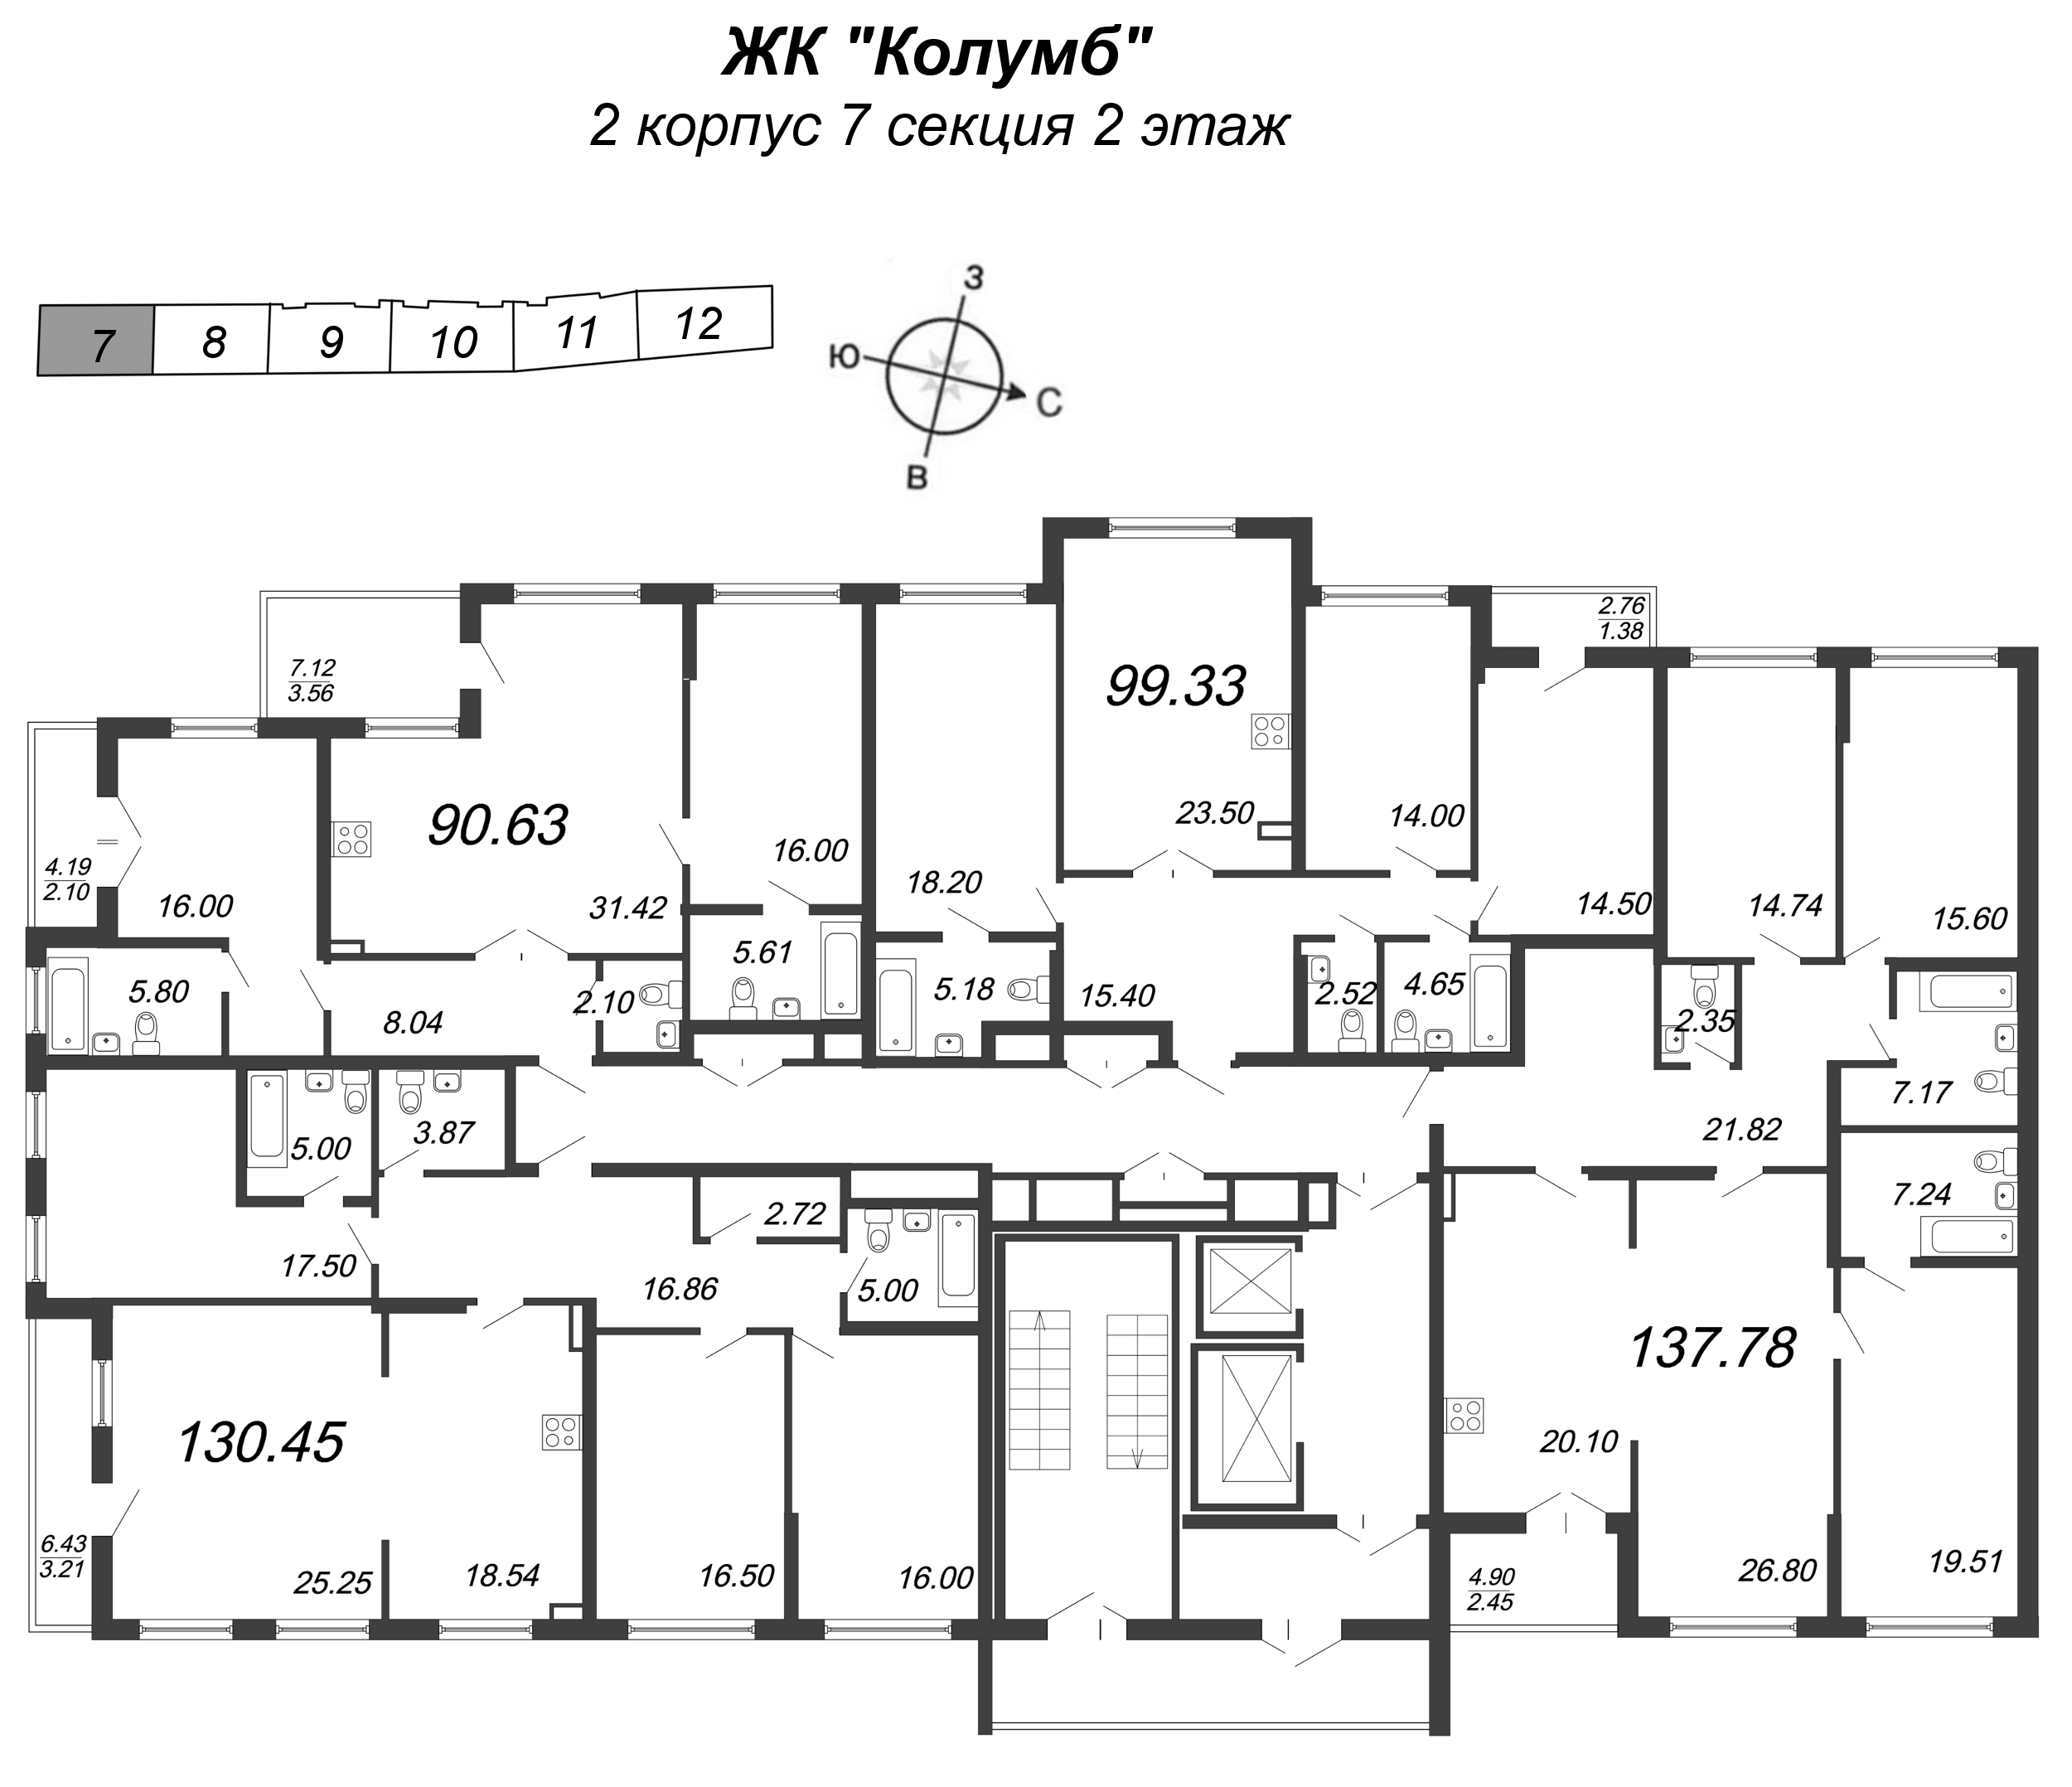 4-комнатная квартира, 137.2 м² в ЖК "Колумб" - планировка этажа